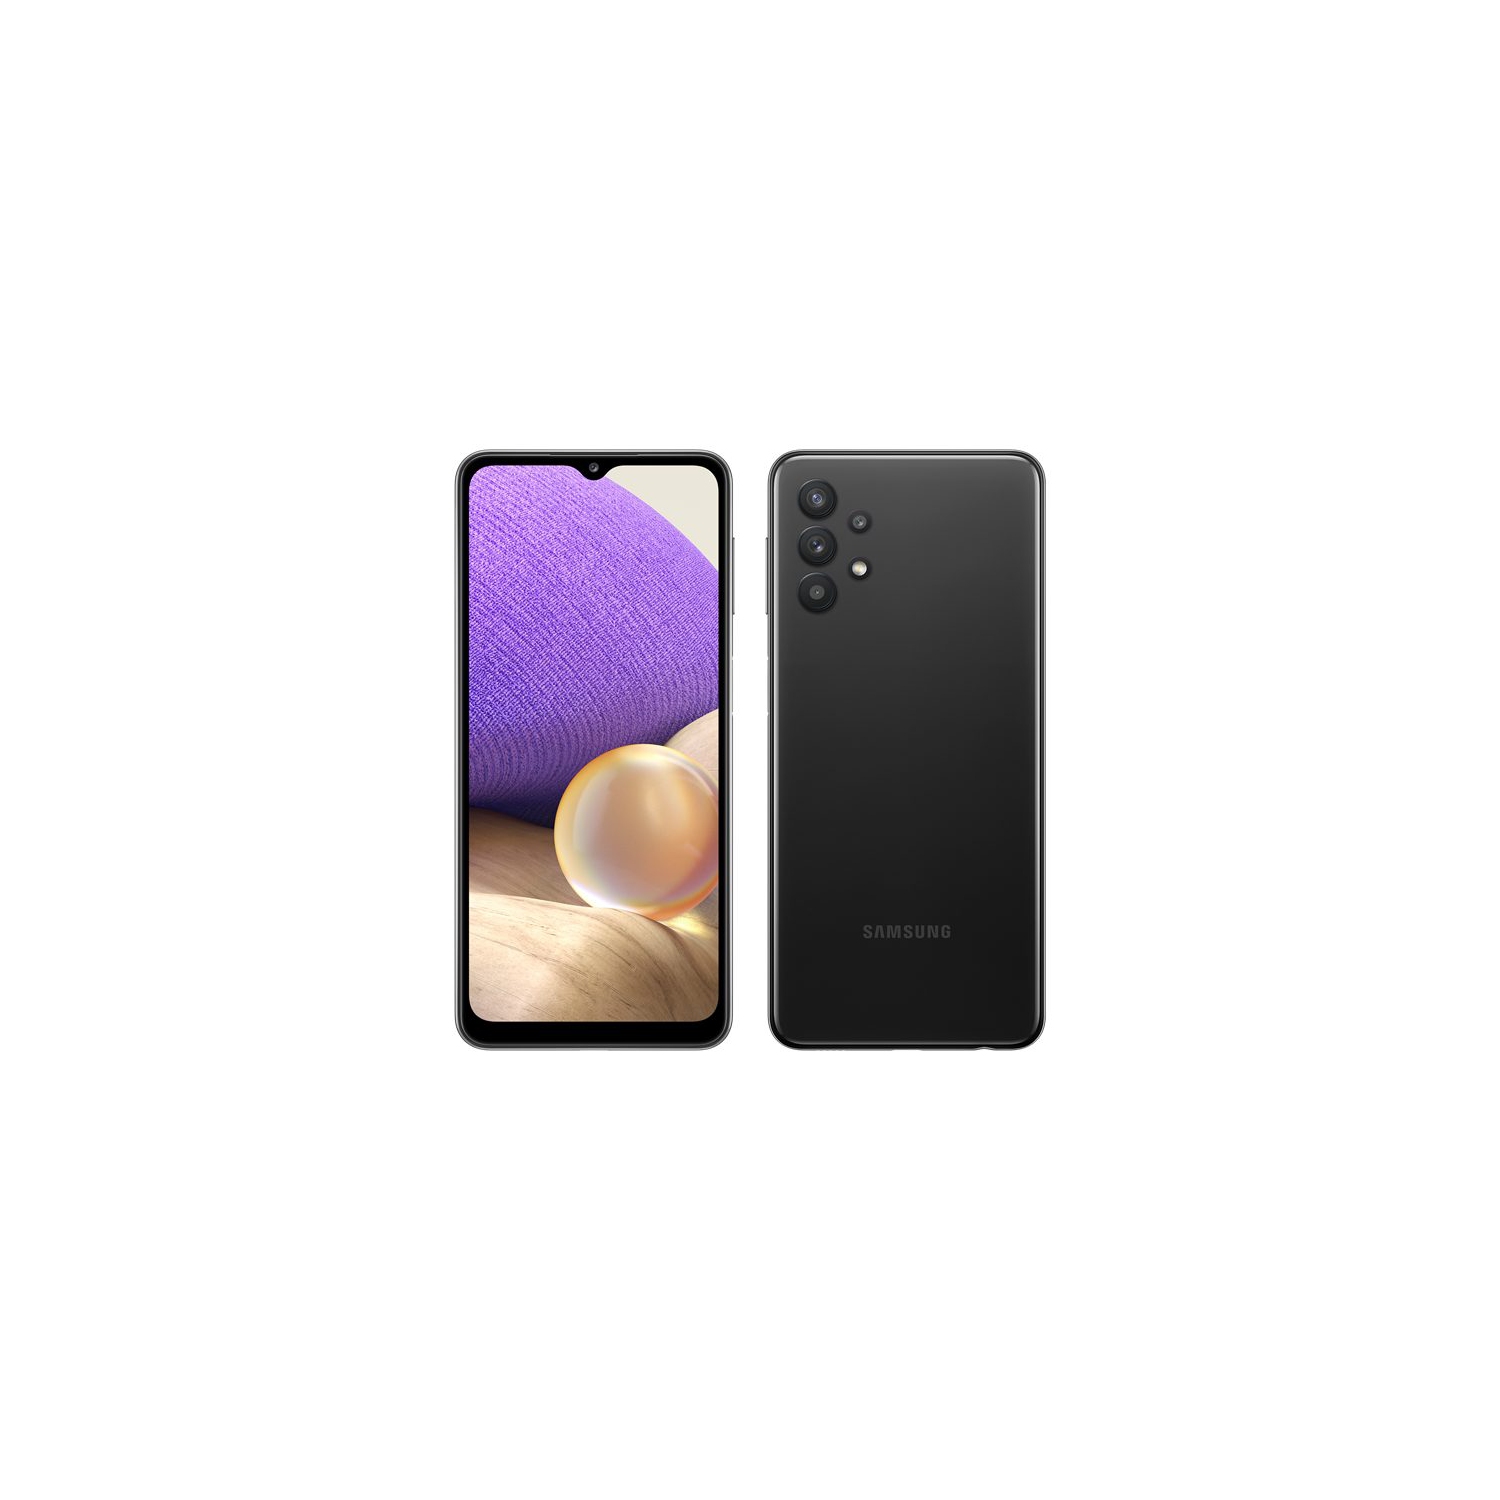 Refurbished (Excellent) - Samsung Galaxy A32 5G 64GB - Awesome Black - Unlocked - Refurbished Like New